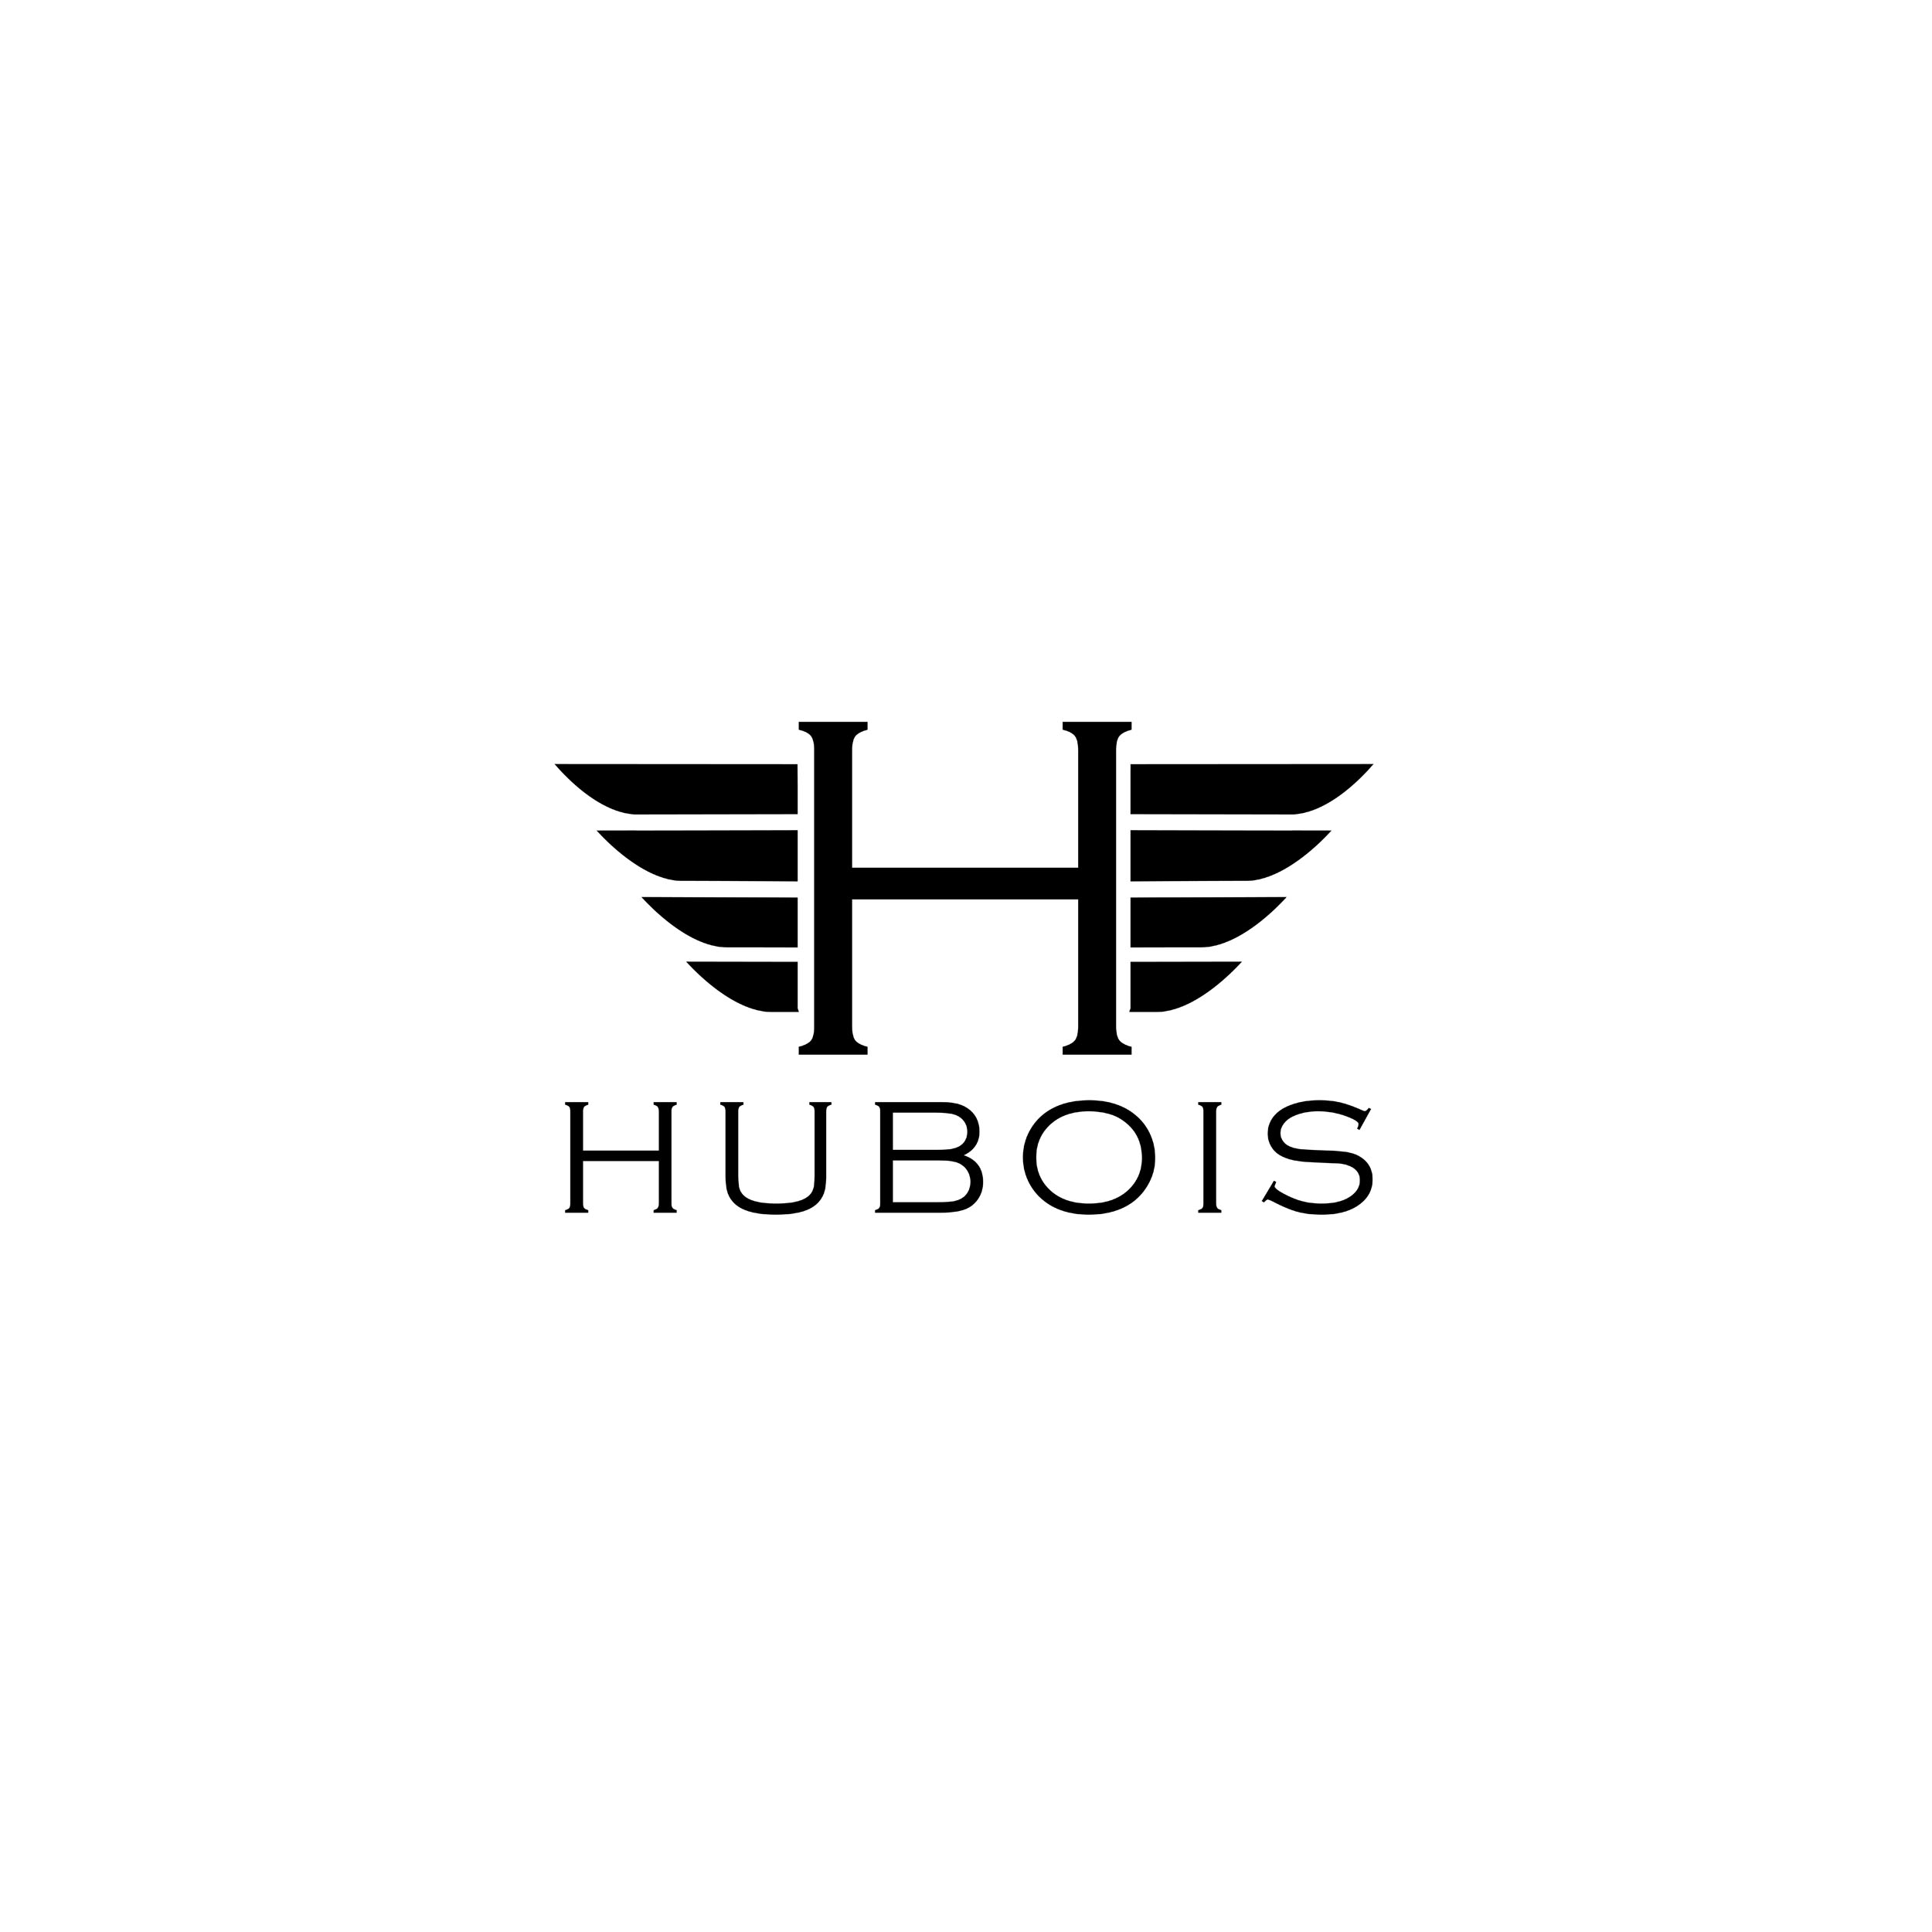 HUBOIS - Luxury Brand Logo Design - JM Graphic Design